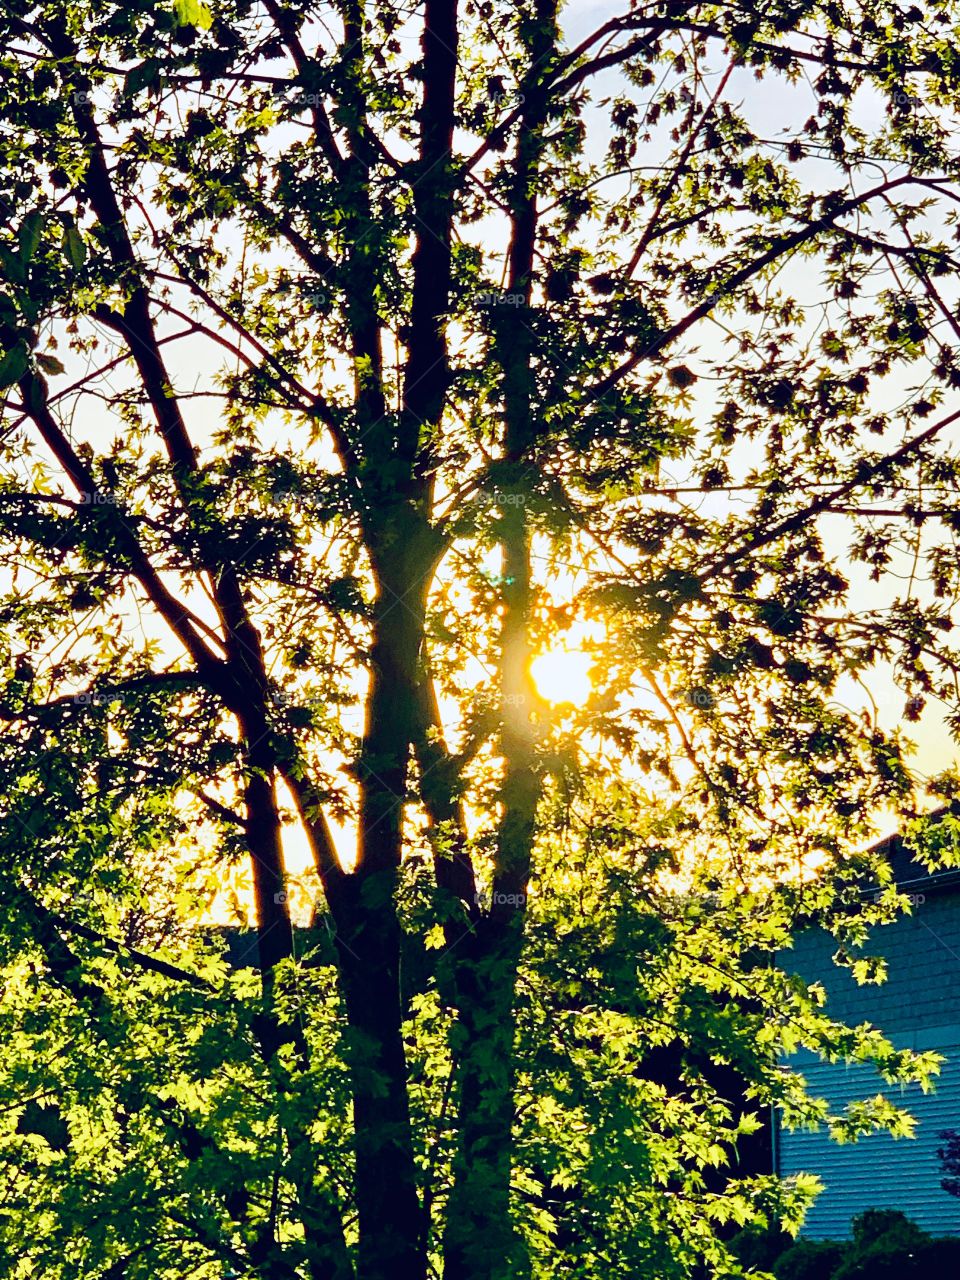 the setting sun shining through a tree